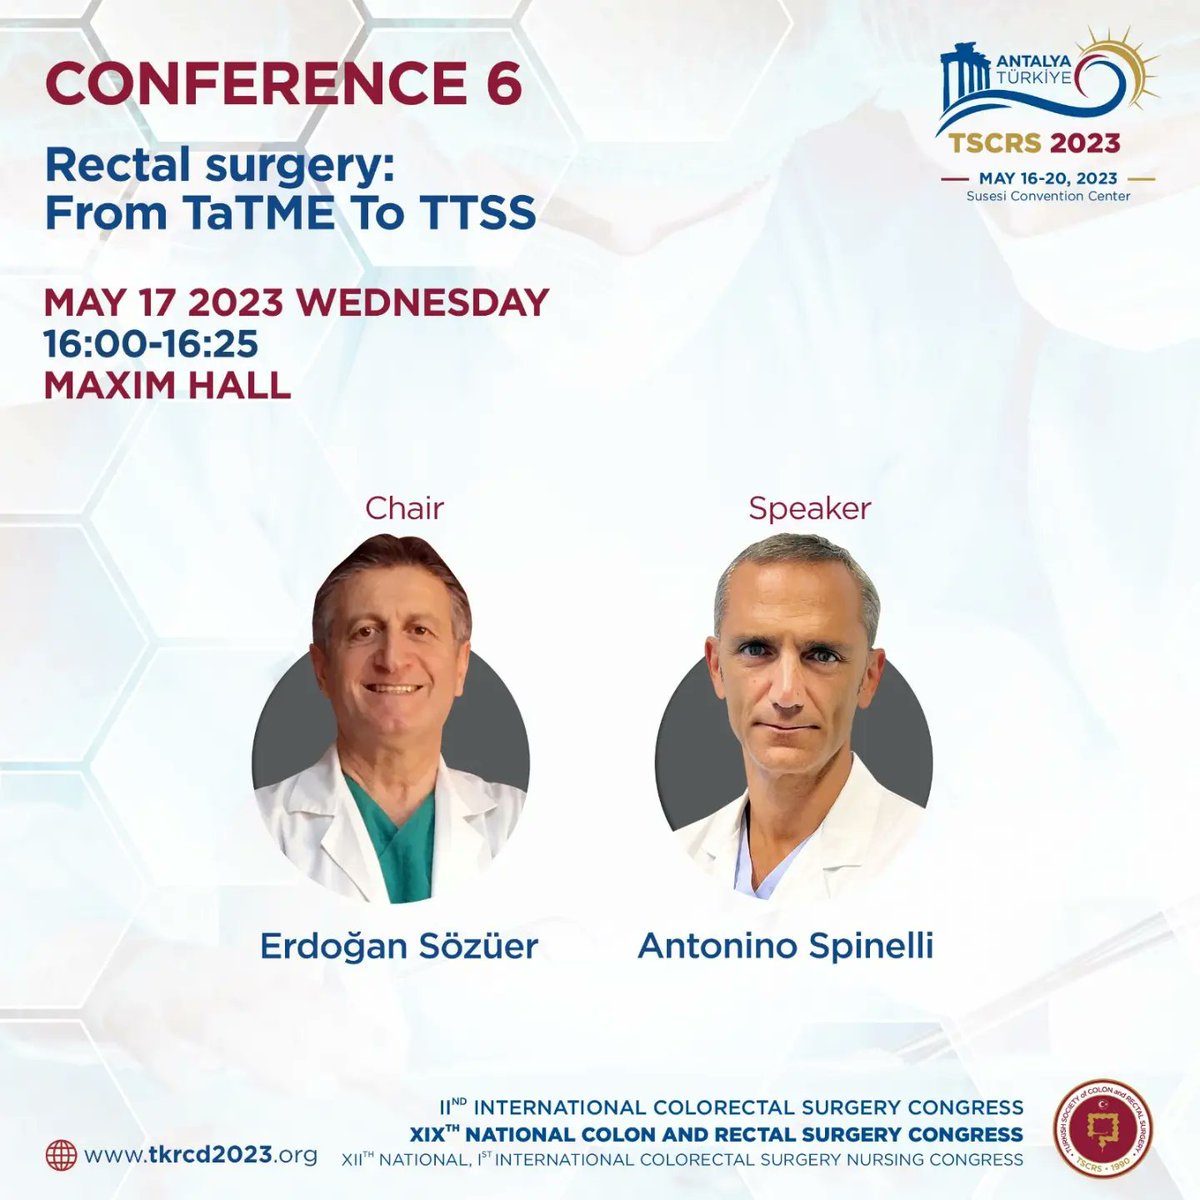 Antonino Spinelli'den Rektum Cerrahisi: TaTME'den TTSS'ye Konferansı #TKRCD2023

Conference on Rektum Surgery: From TaTME to TTSS by Antonino Spinelli #TSCRS2023